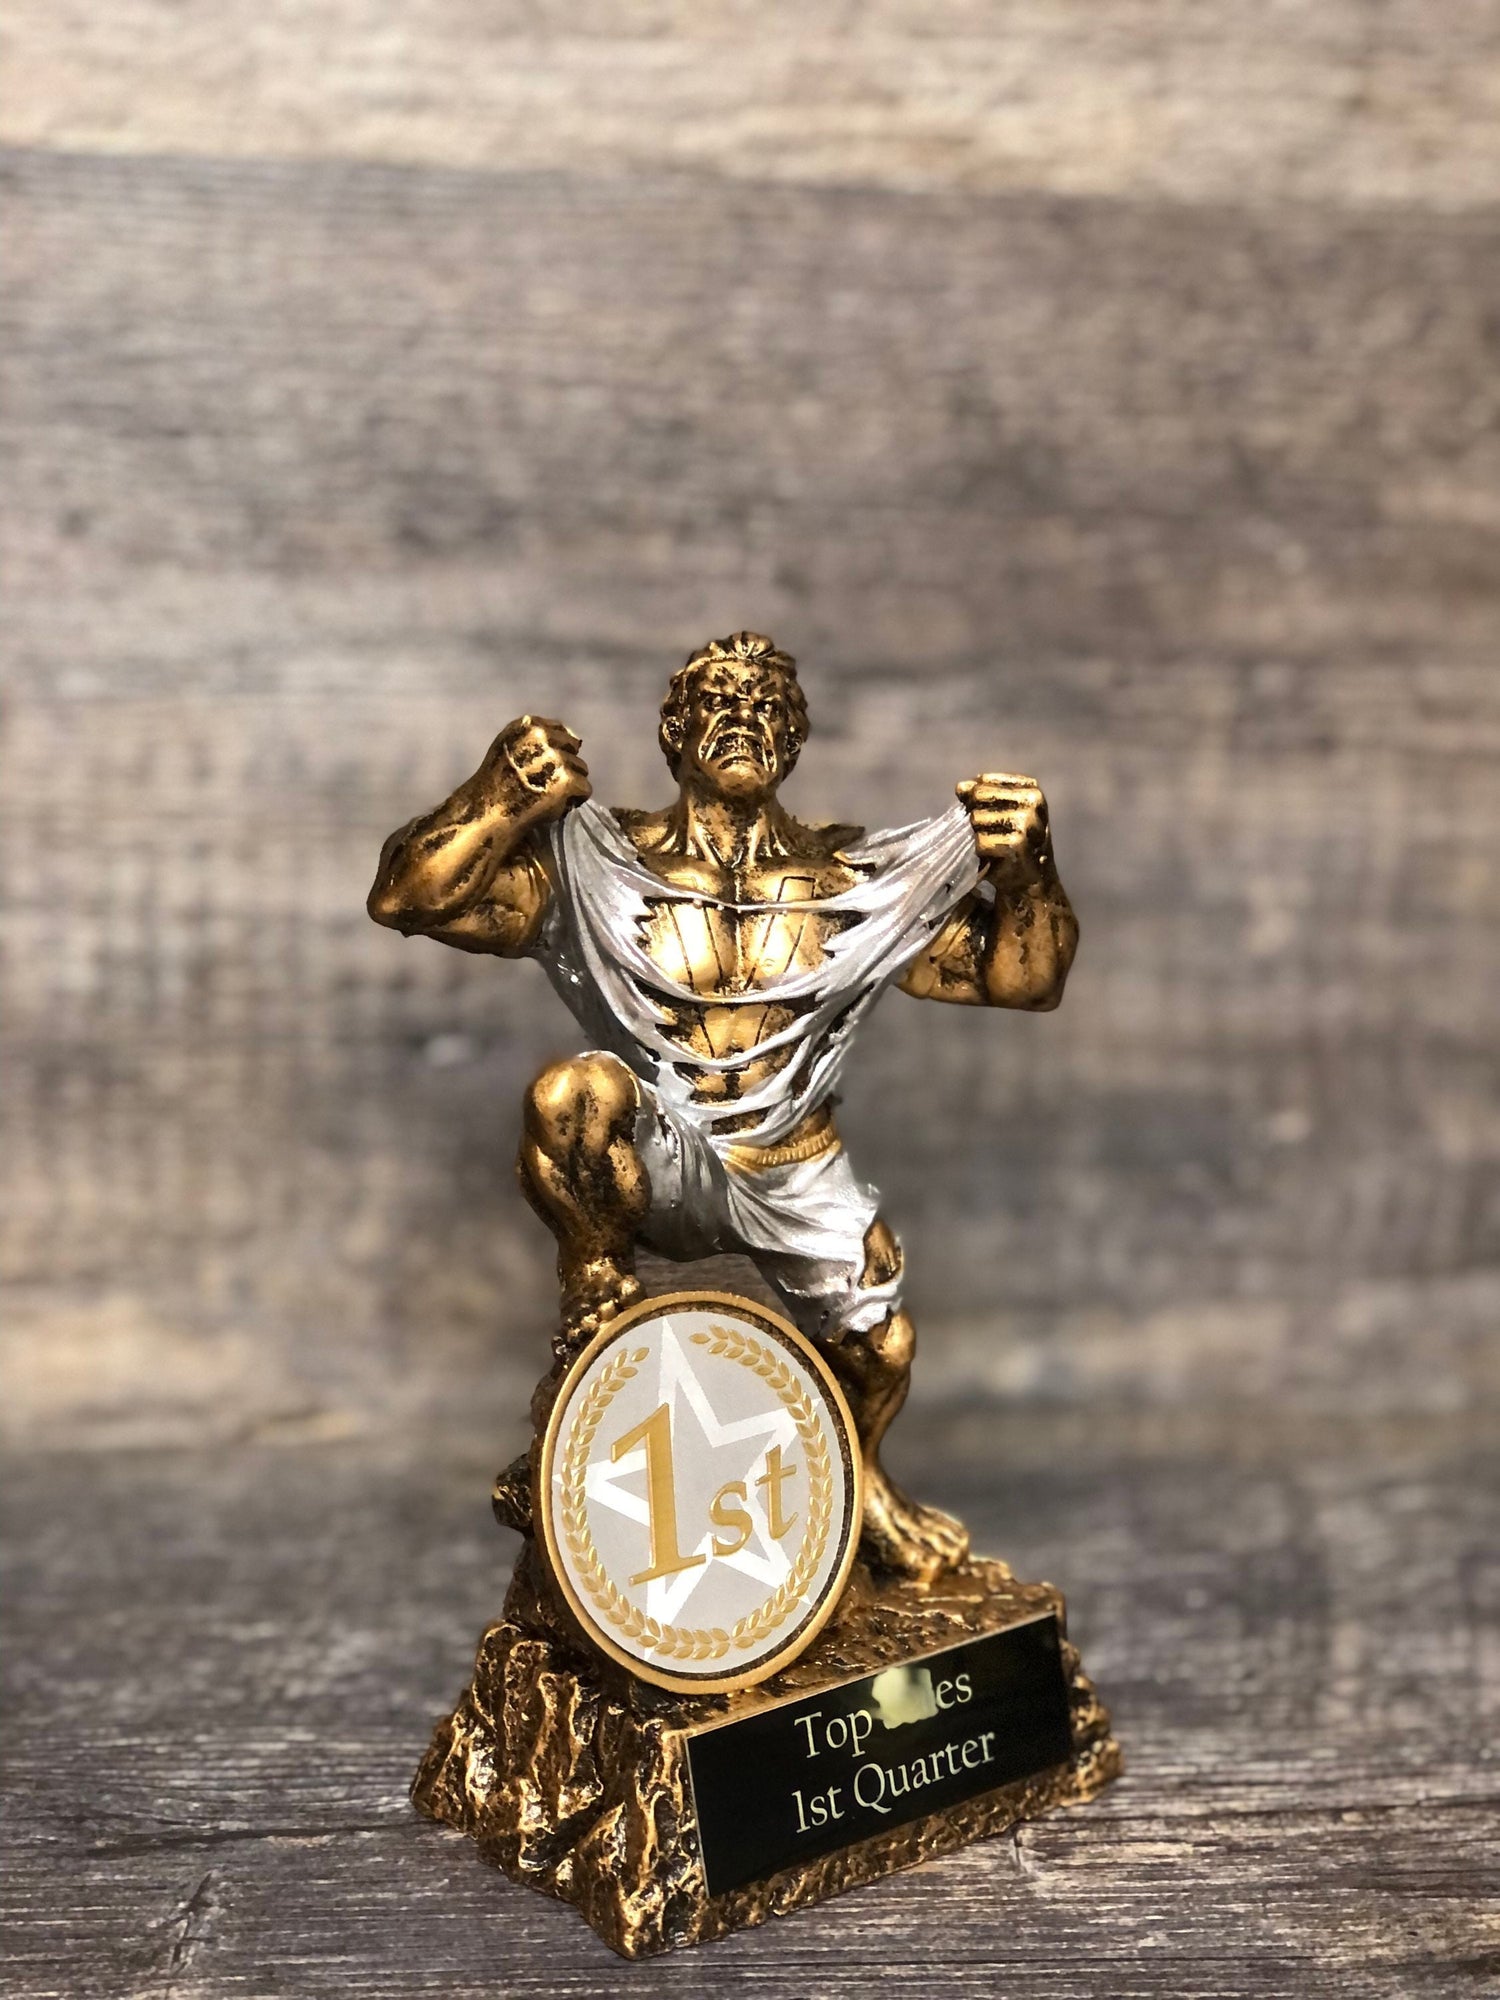 Achievement Award Trophy Personalized Employee Of The Month Beast Top Sales Trophy #1 Salesman Appreciation Award